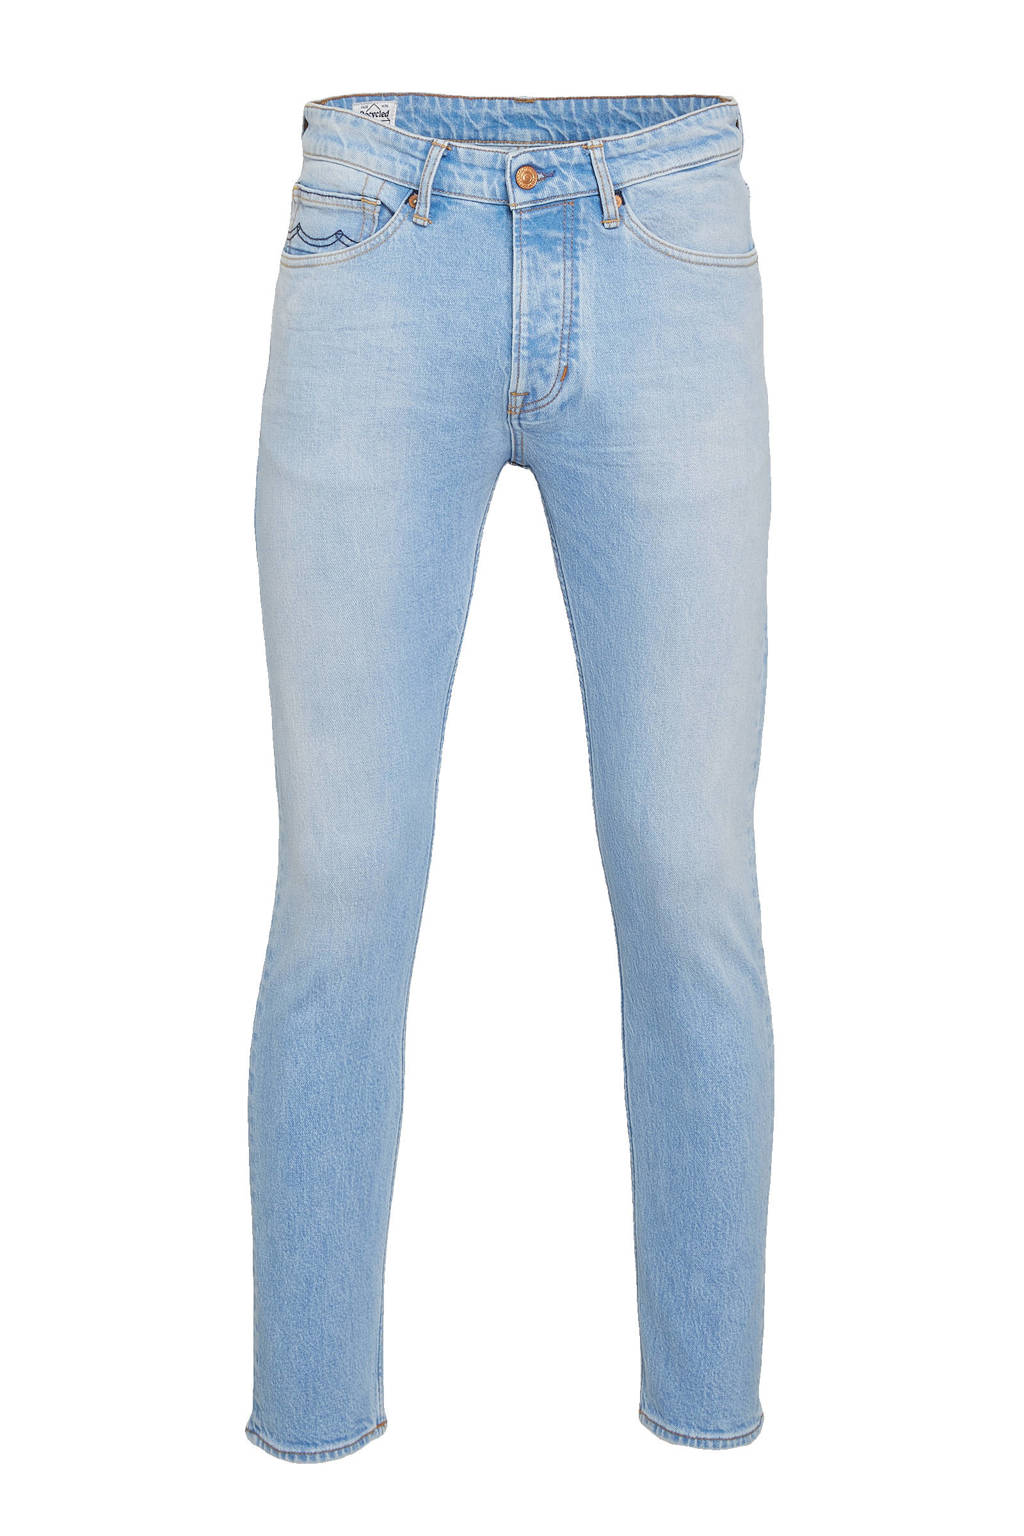 Kings of Indigo slim fit jeans John 5043 xavier dream blue